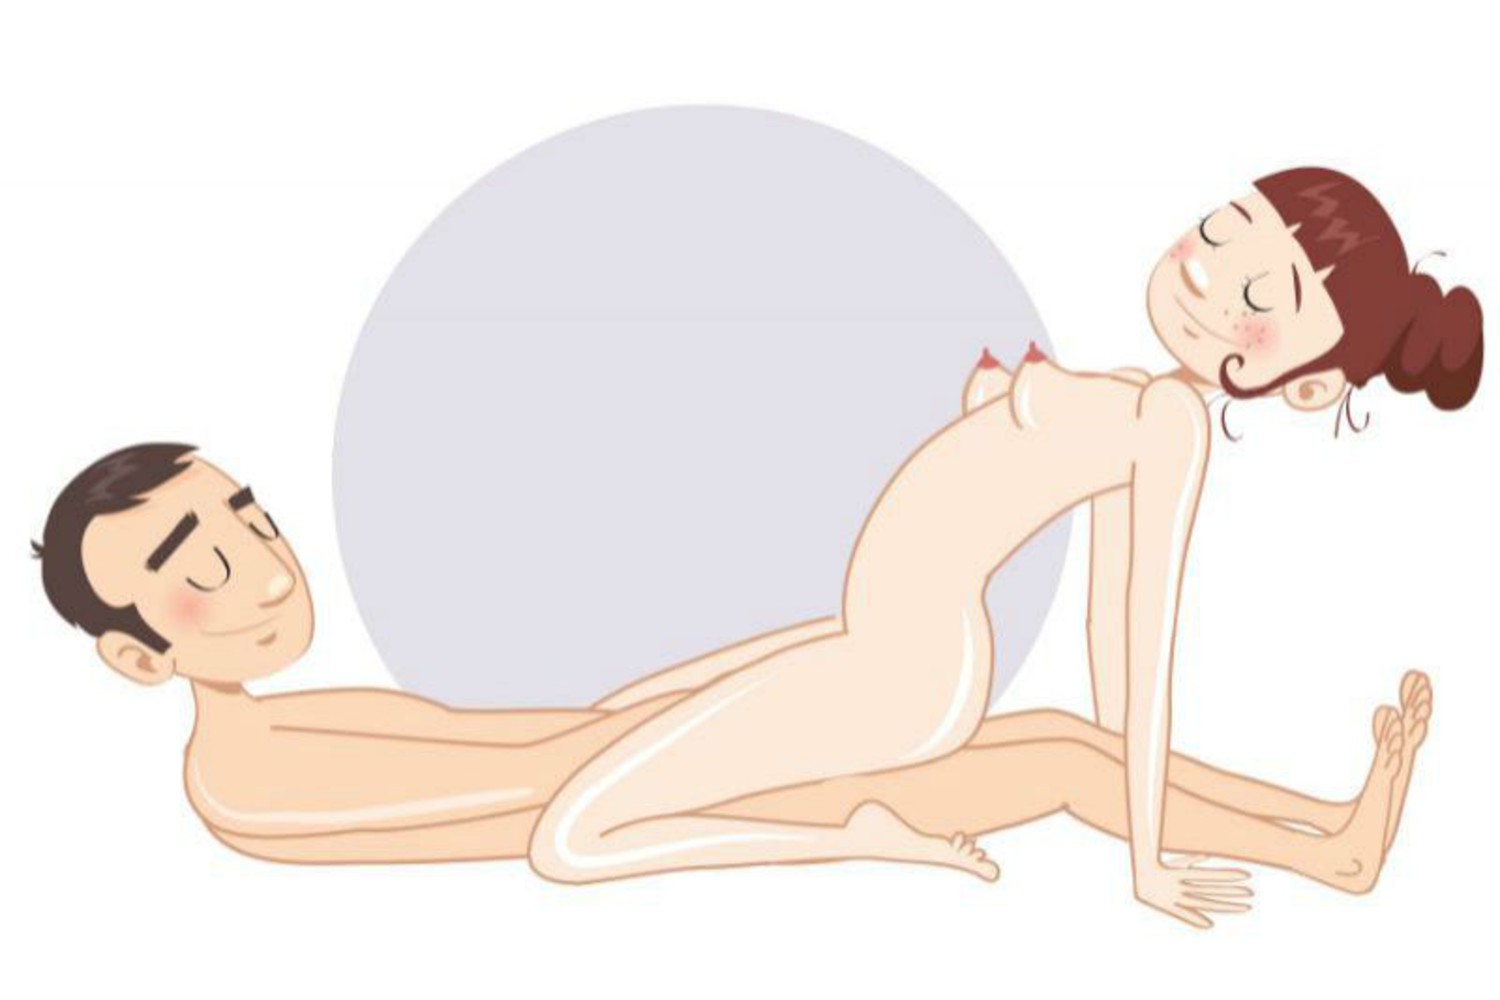 Sex position clips